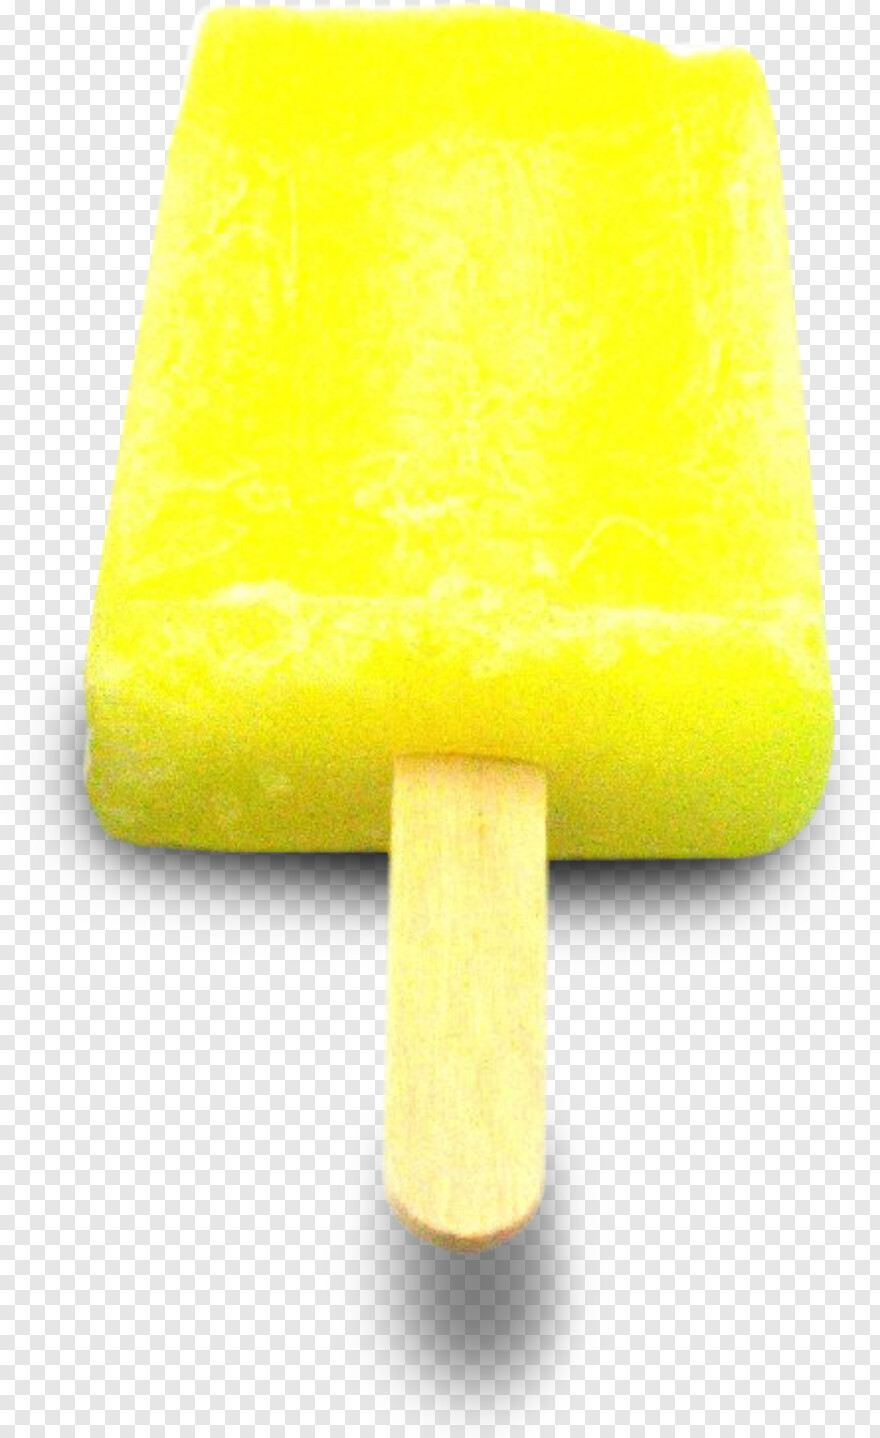 popsicle-stick # 678938